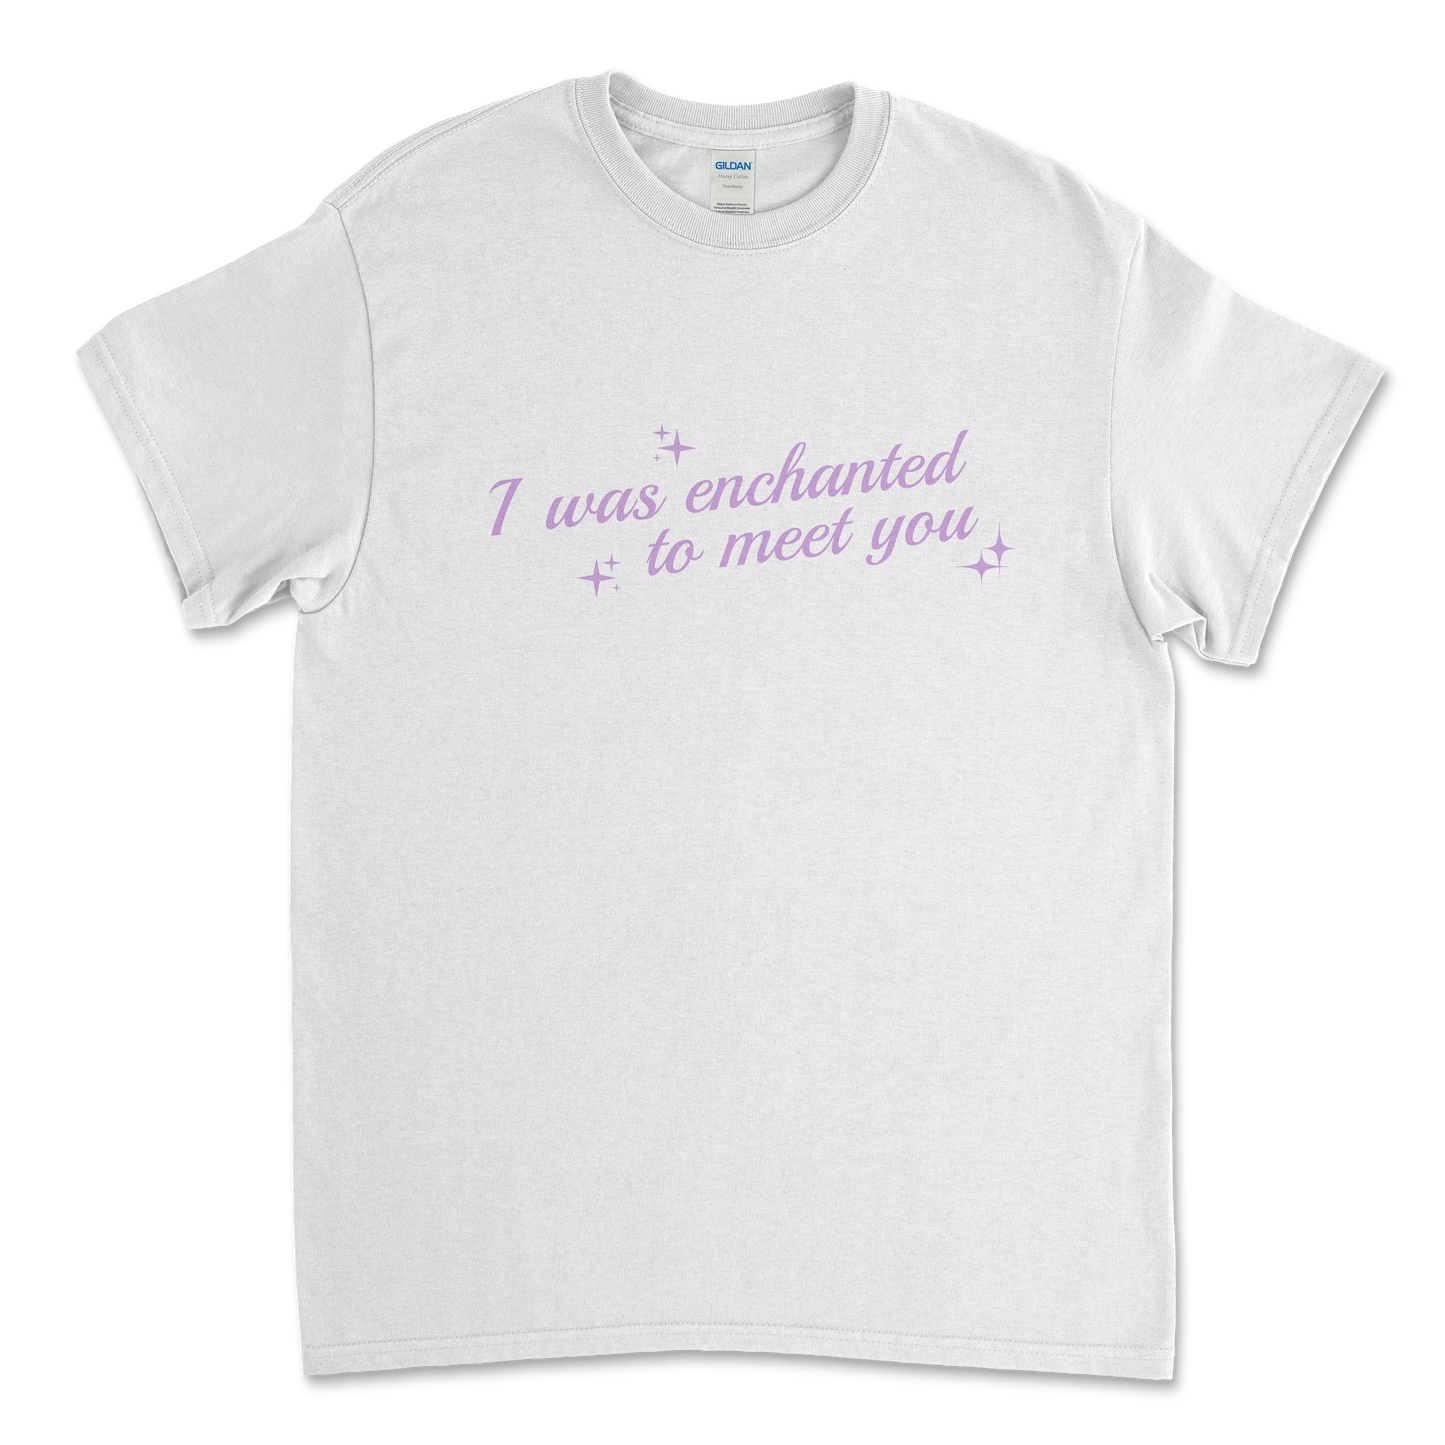 Enchanted T-Shirt